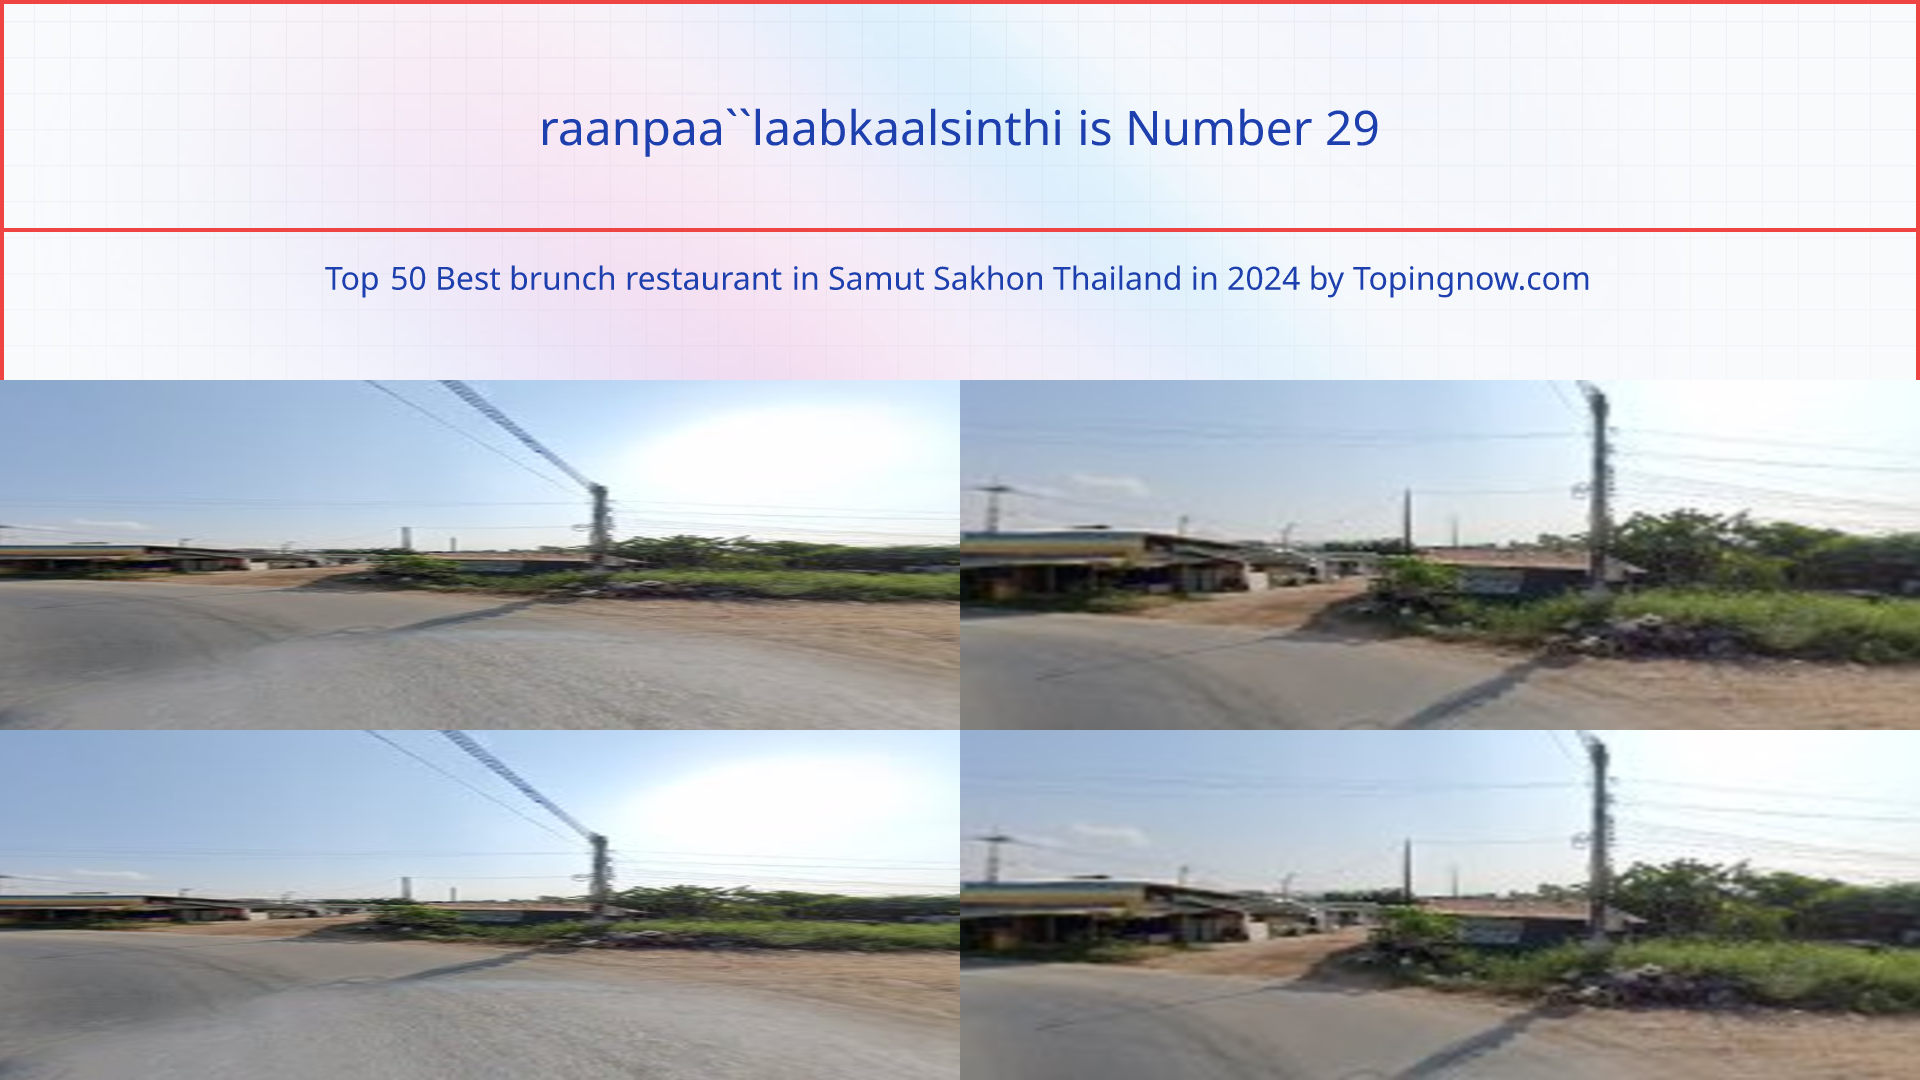 raanpaa``laabkaalsinthi: Top 50 Best brunch restaurant in Samut Sakhon Thailand in 2024